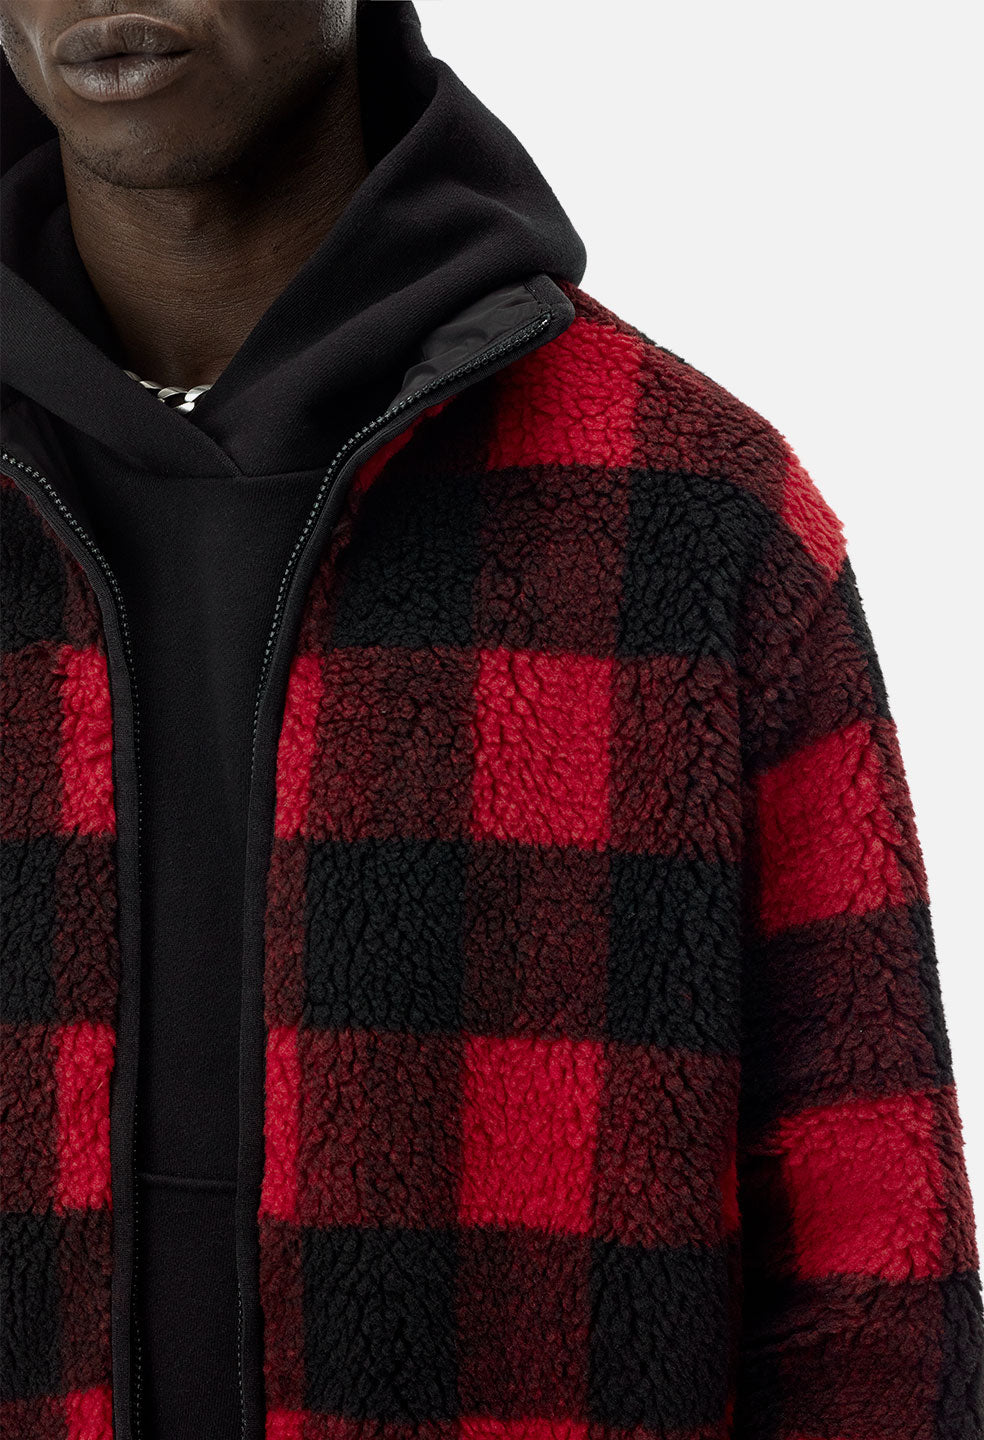   Essentials Men's Quarter-Zip Polar Fleece Jacket, Black  Red Buffalo Check, X-Small : Clothing, Shoes & Jewelry